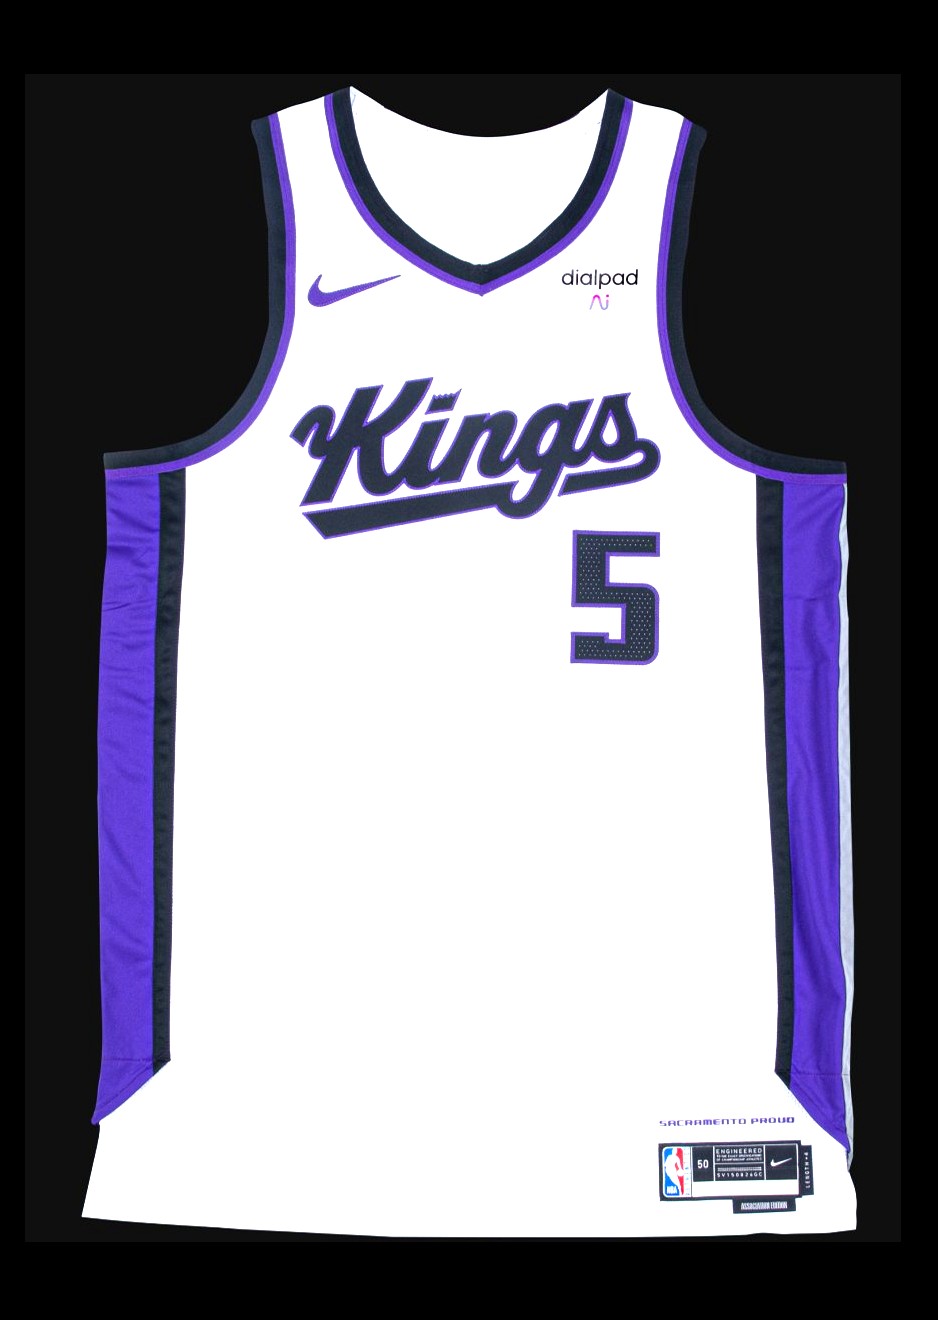 Sacramento Kings unveil new uniforms for 2023-24 season